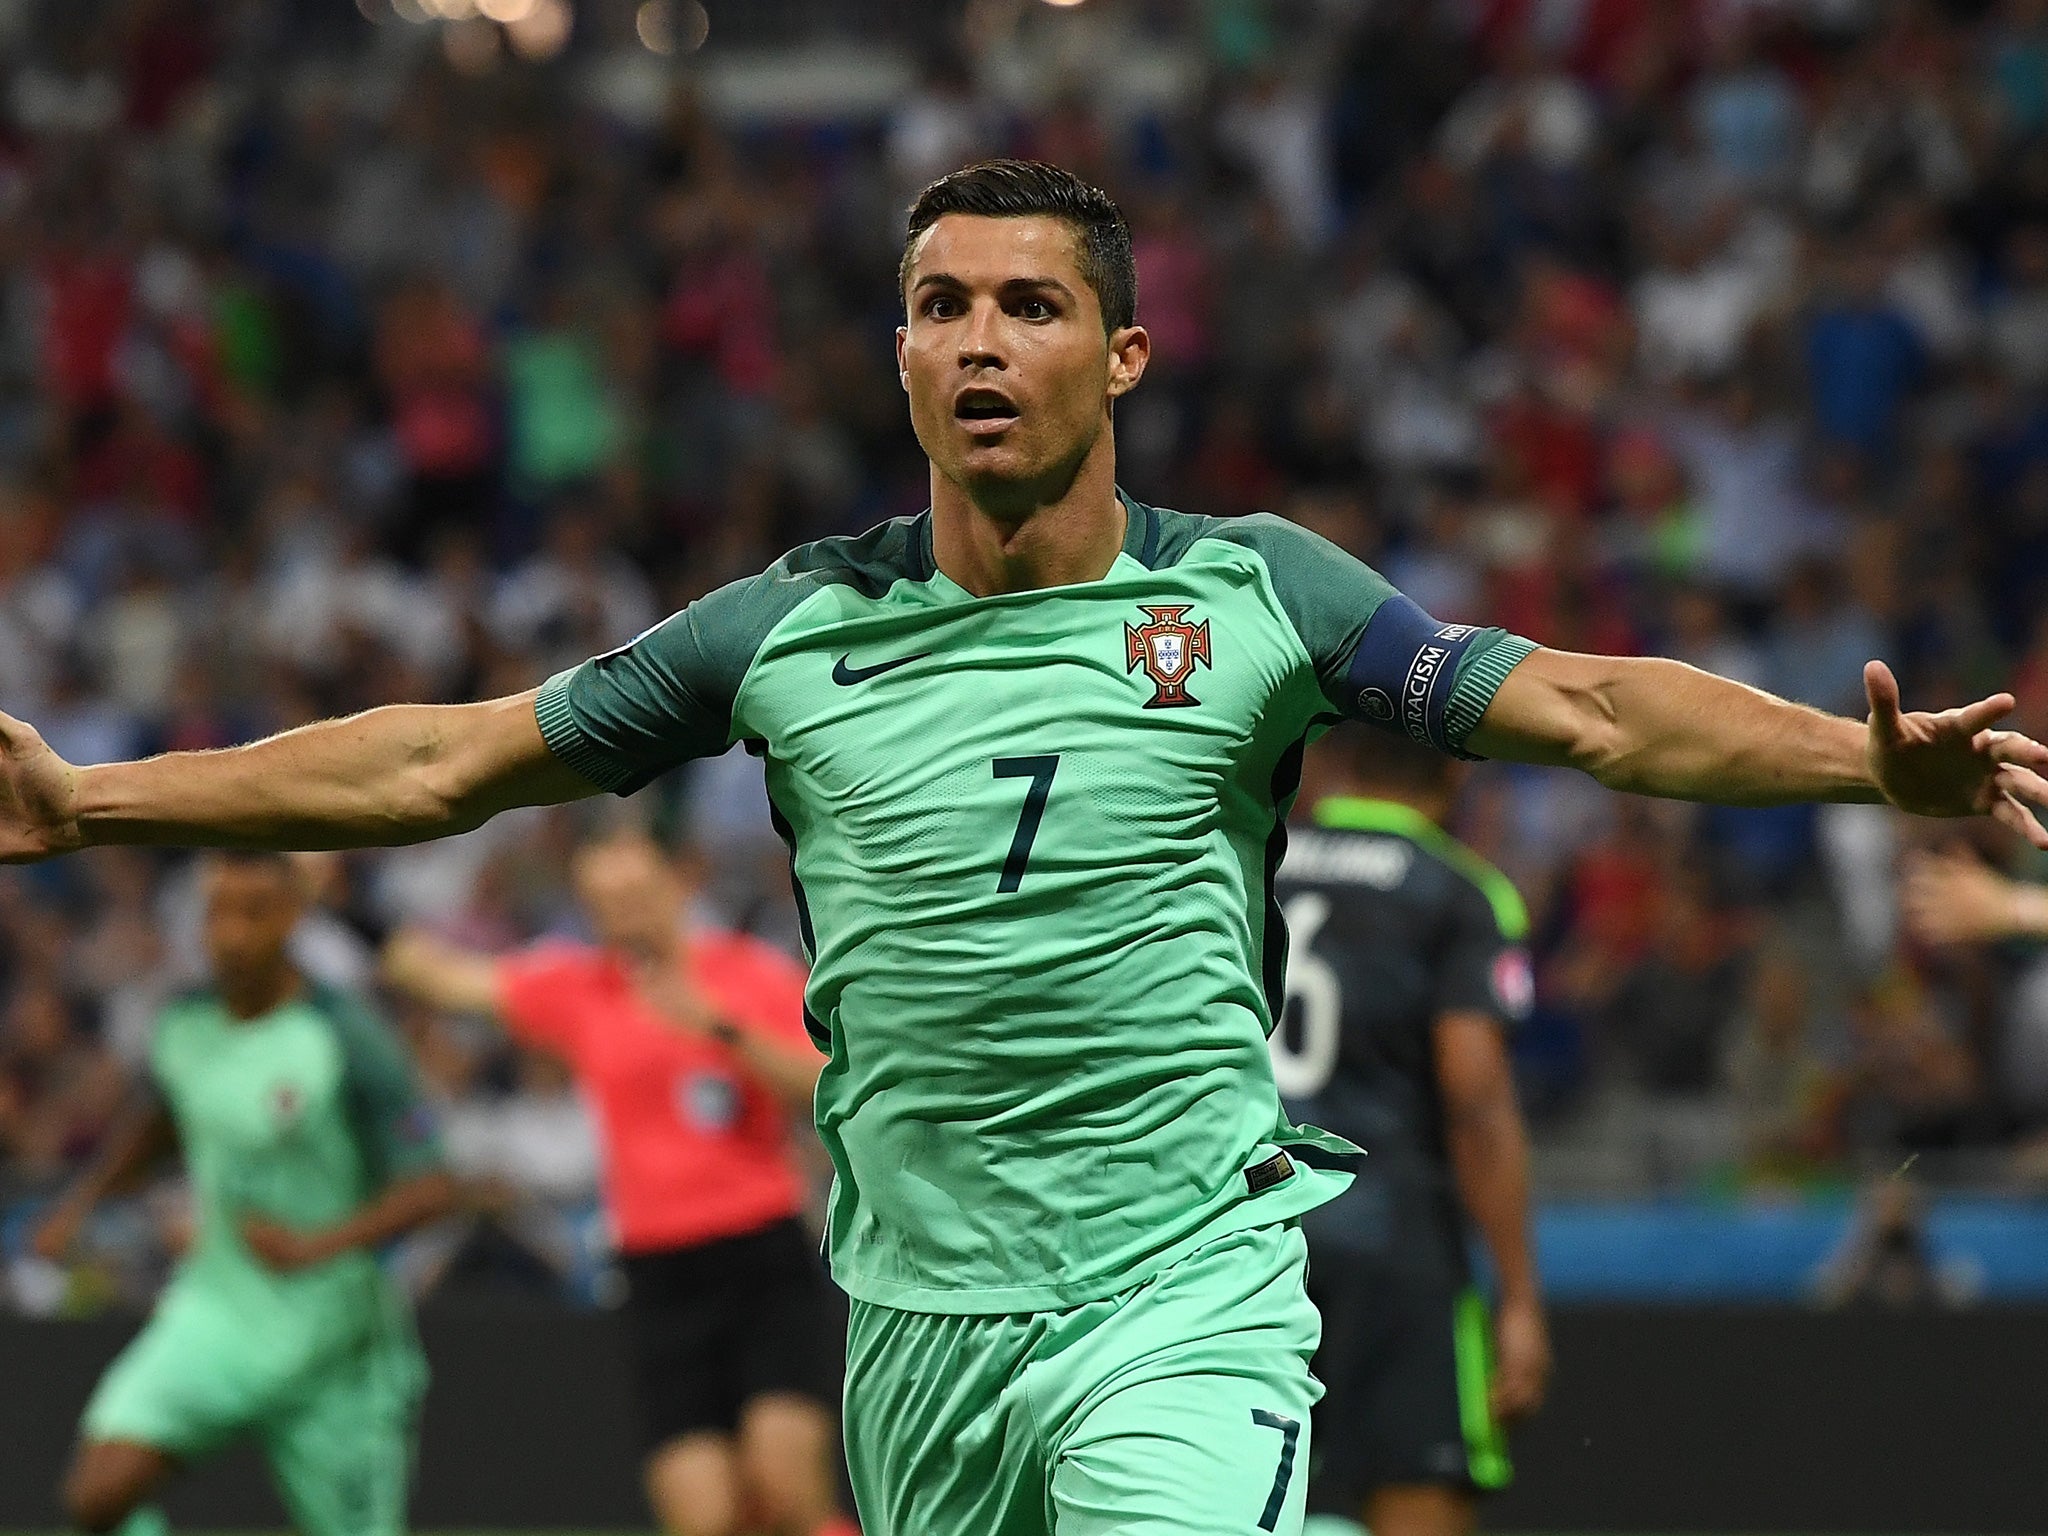 Ronaldo celebrates breaking the deadlock early on in the second half